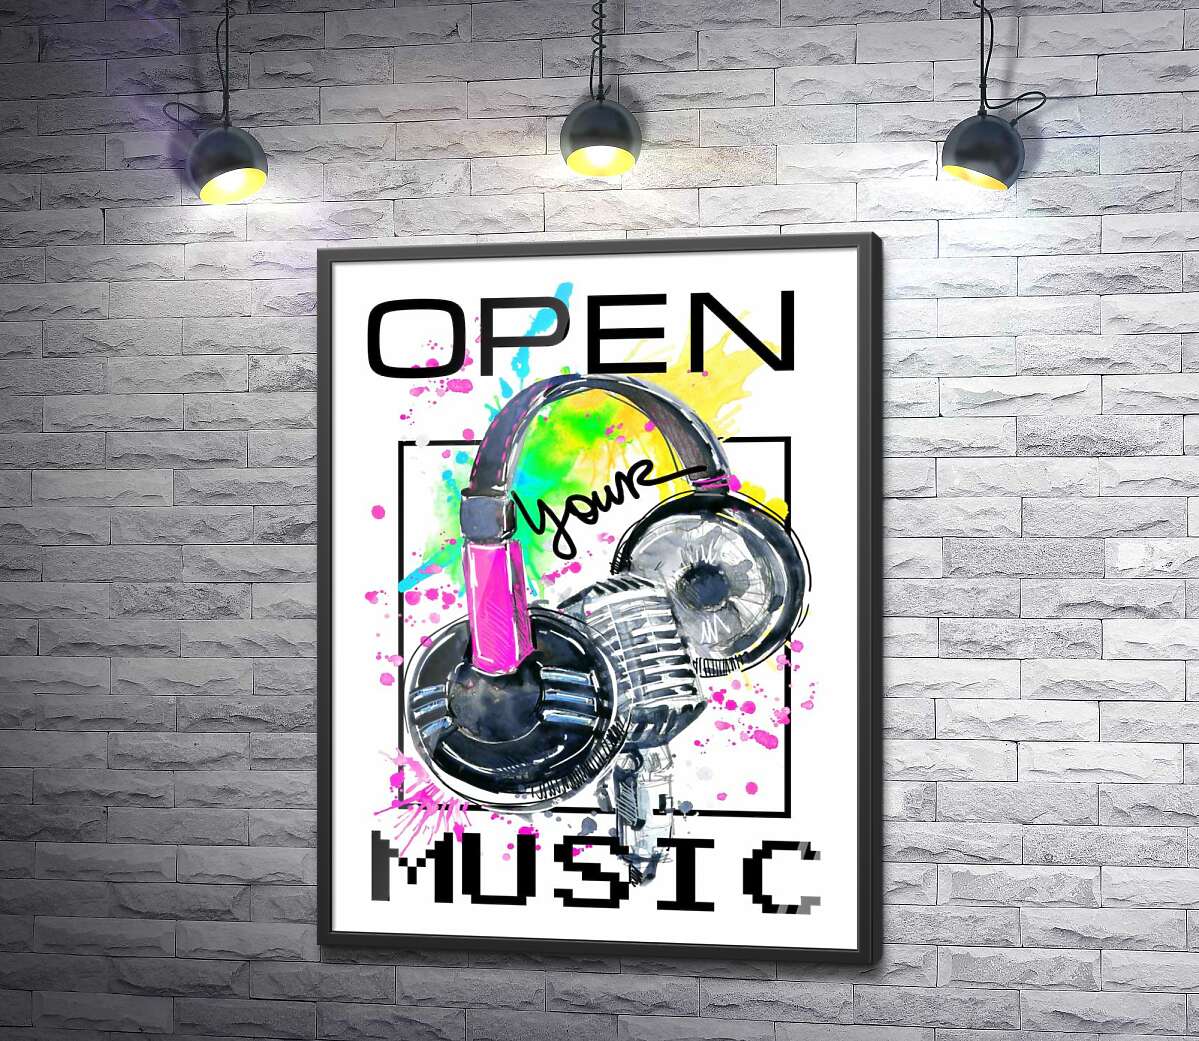 постер Навушники та мікрофон на бризках жовто-зеленого фону з написом "open your music"